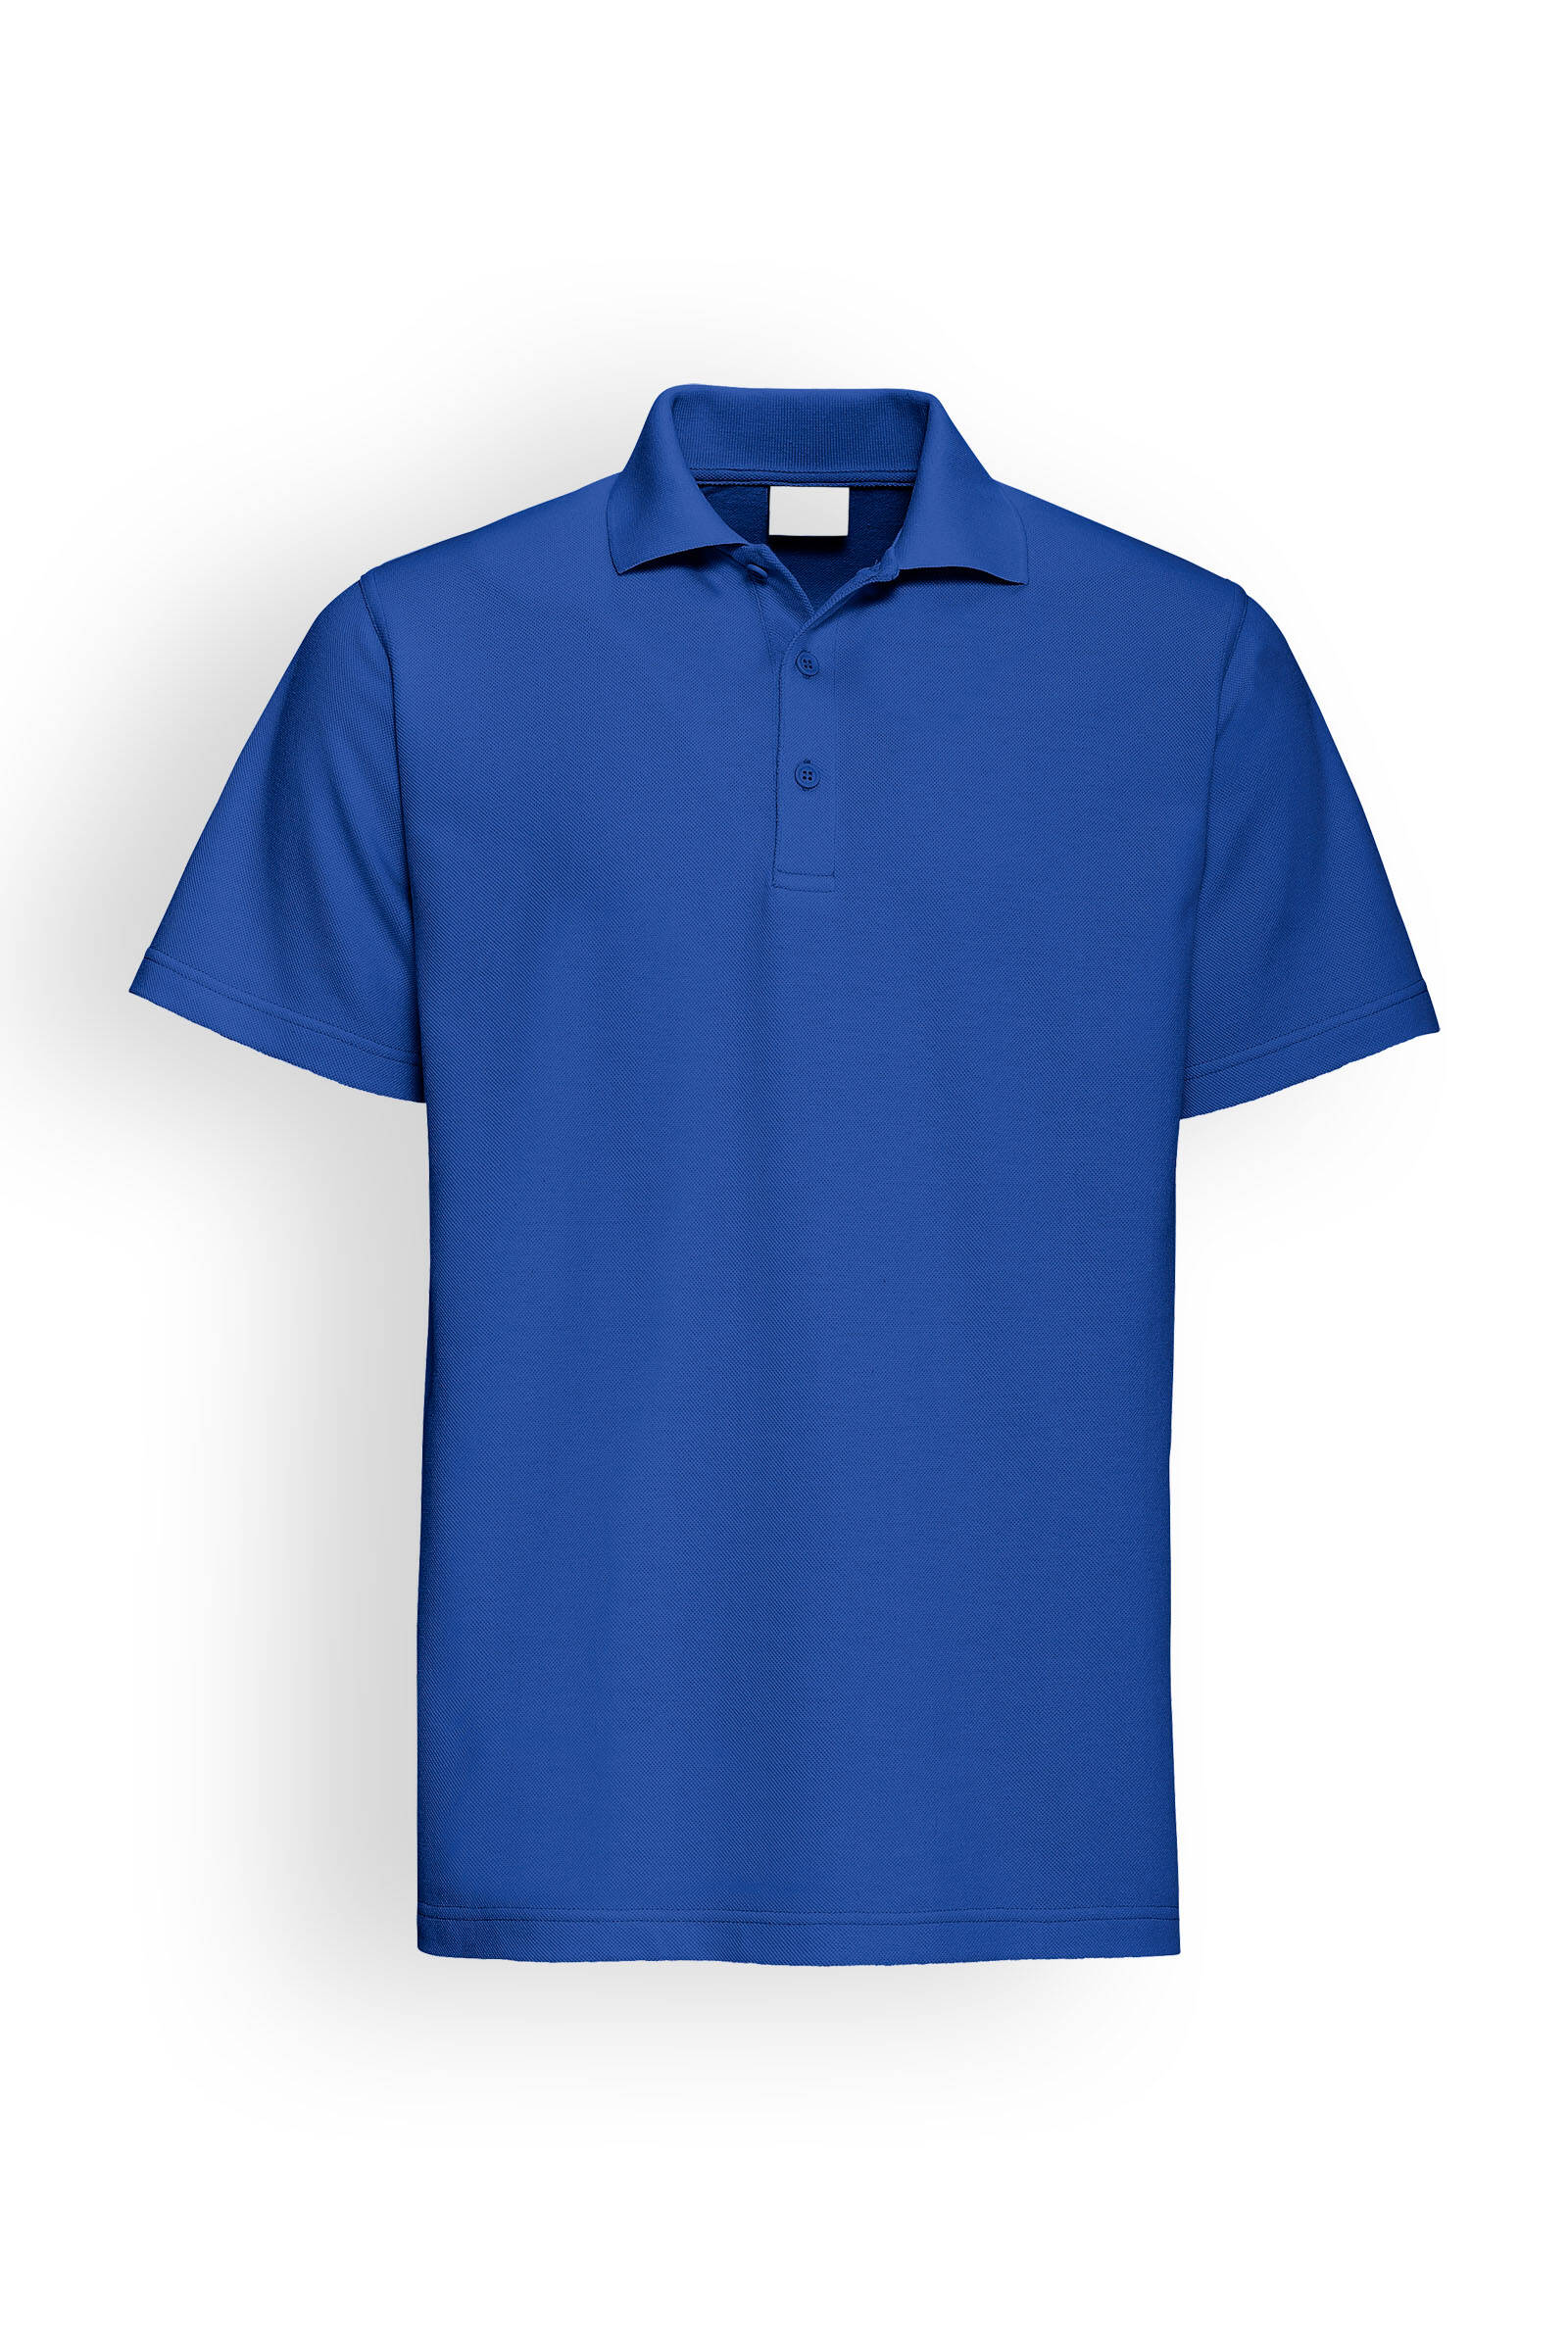 CORE Shirt Unisex - Polokragen königsblau